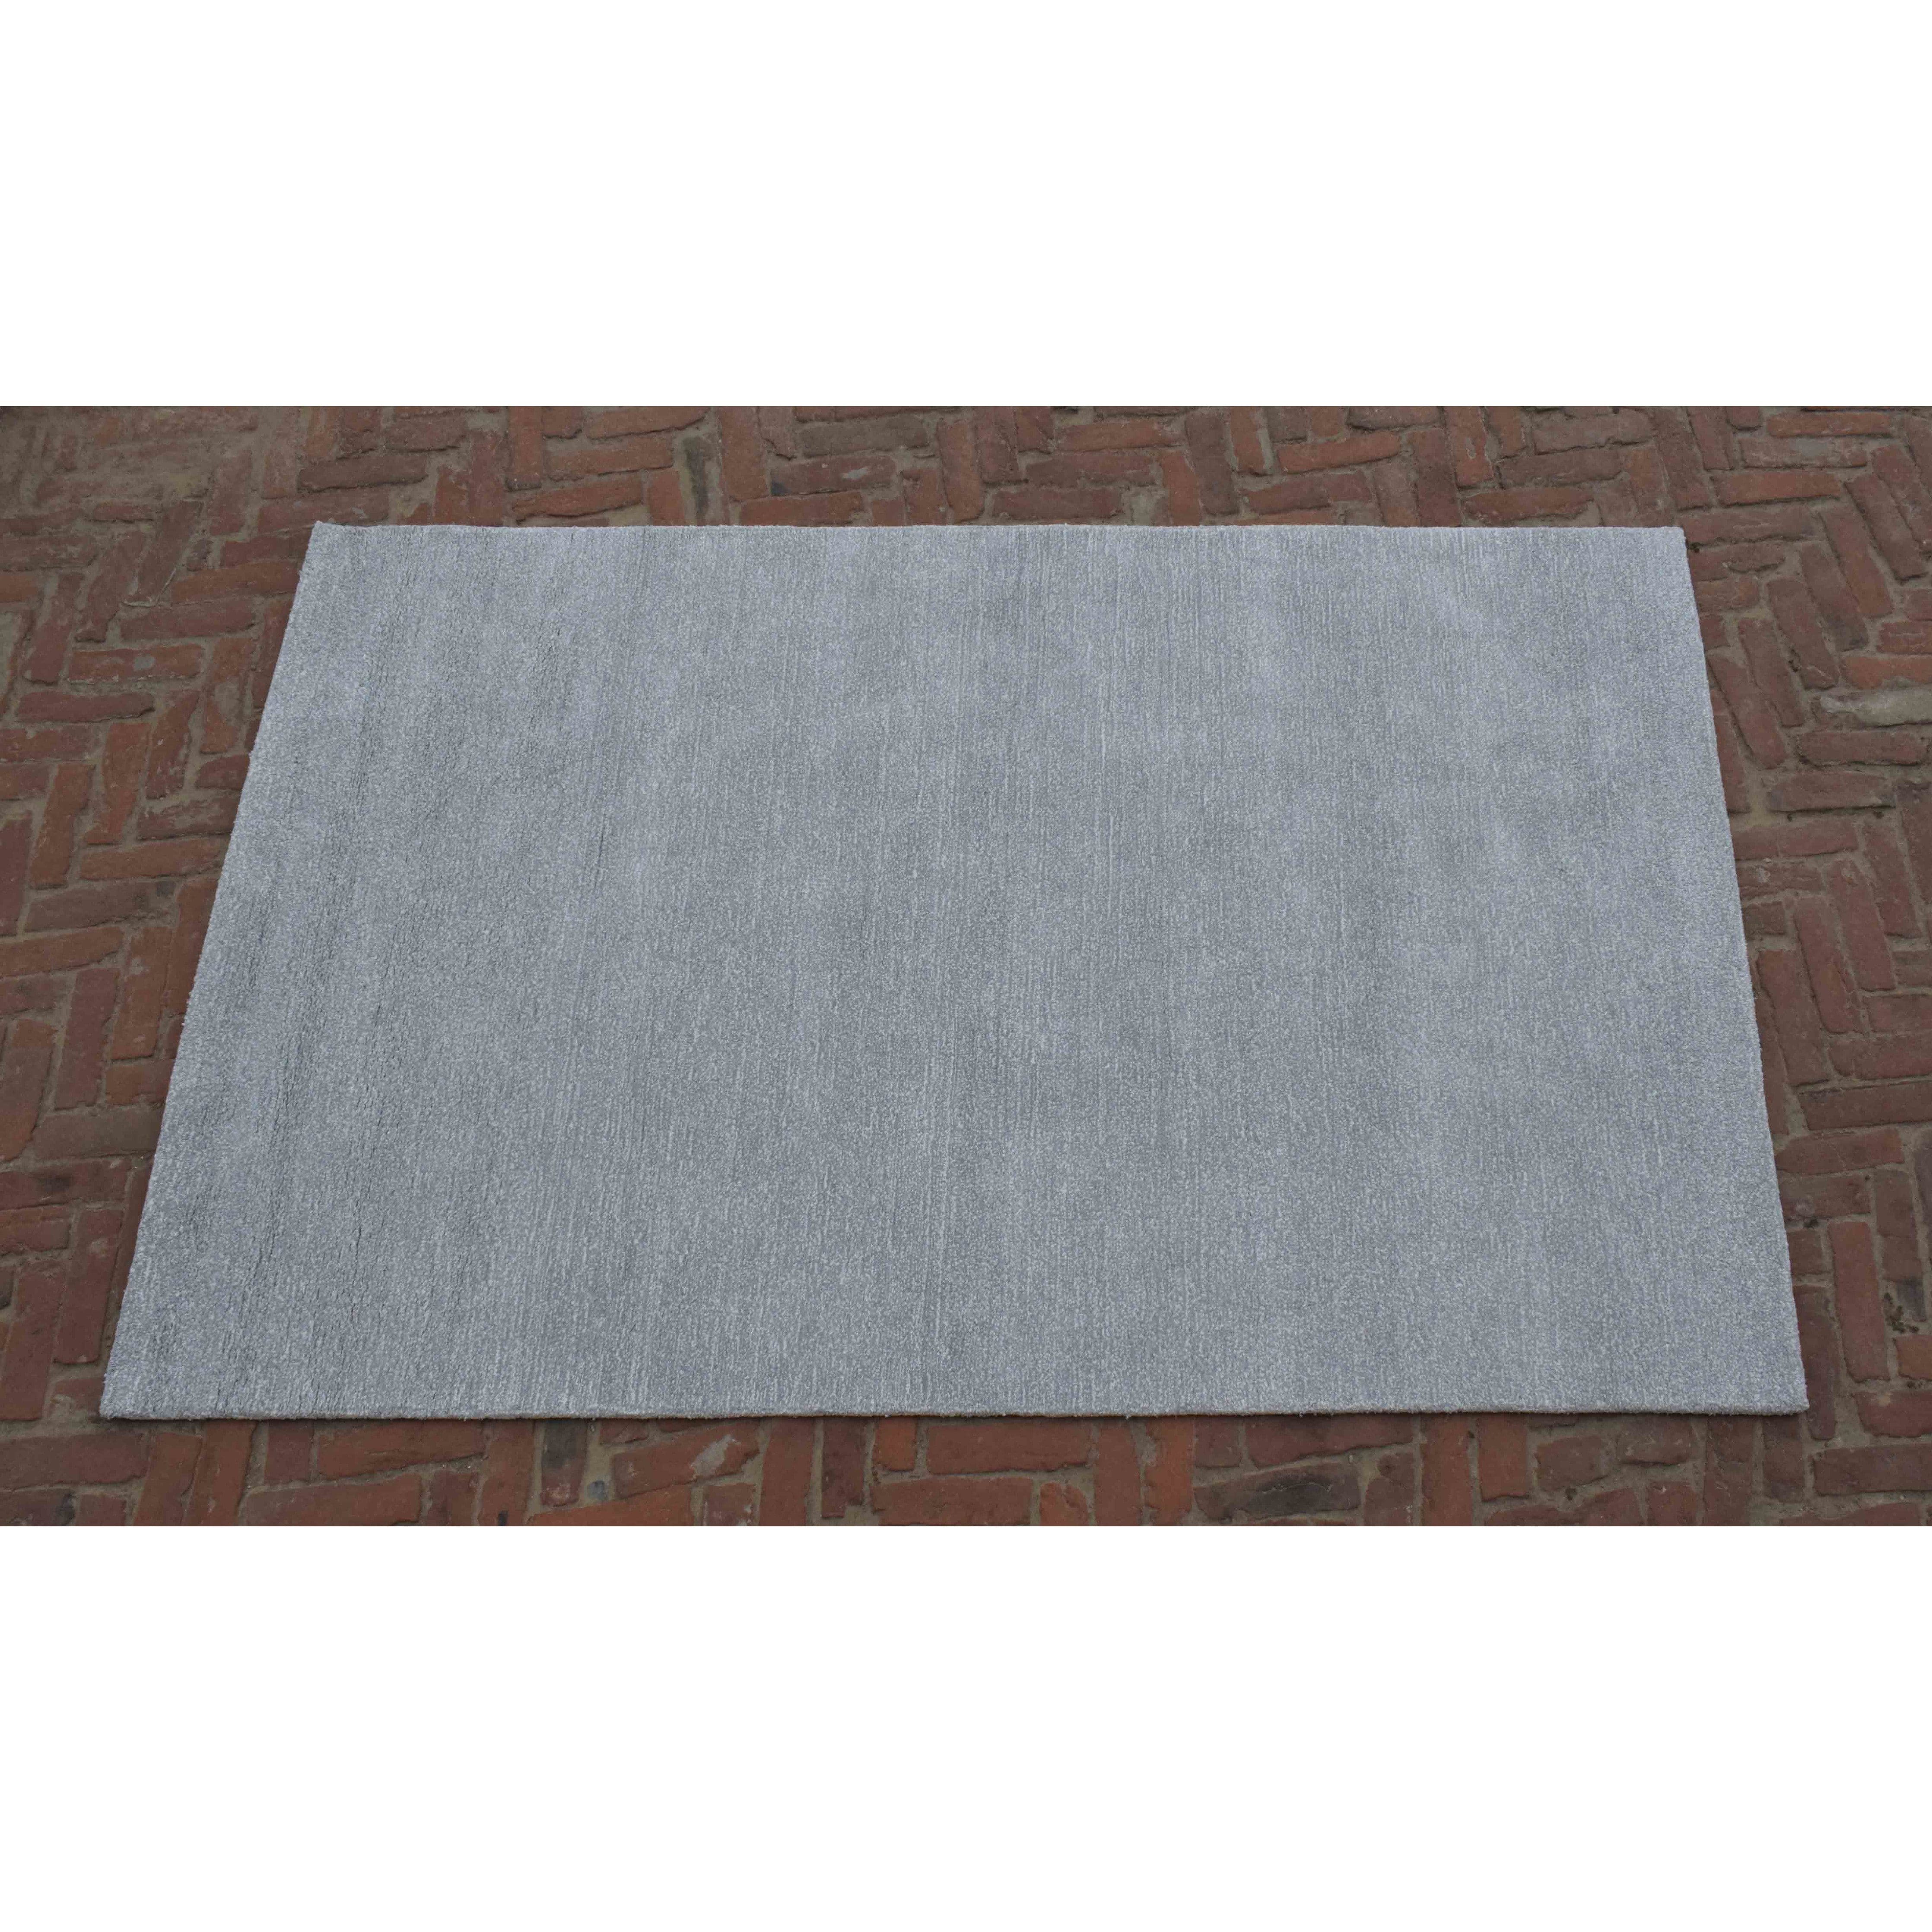 Quality Latex glue for custom rugs and rug fabrication